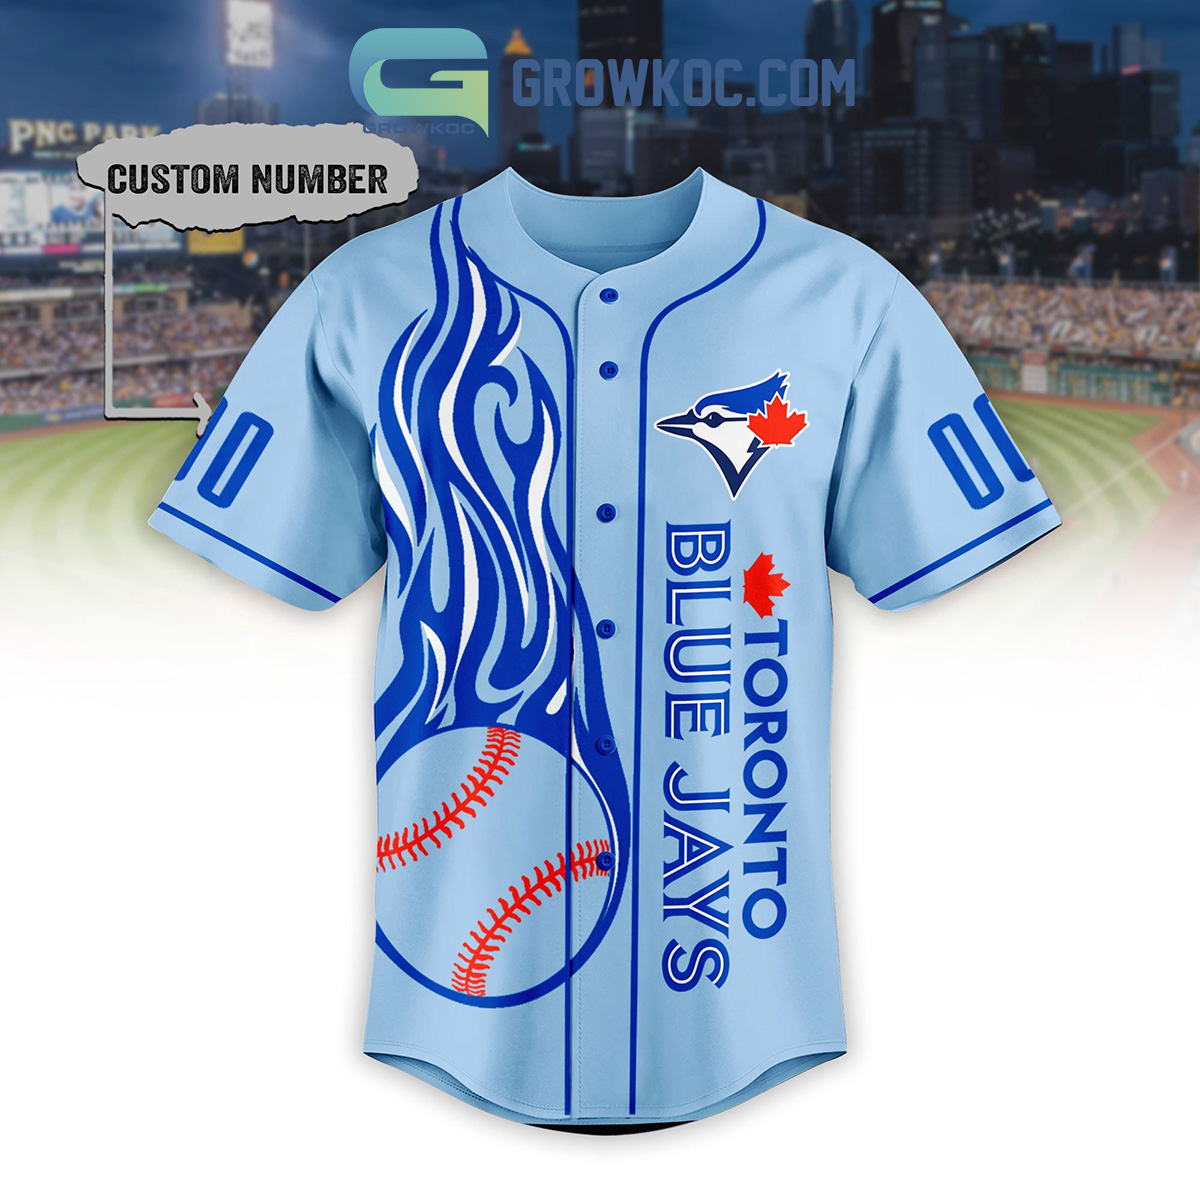 MLB Milwaukee Brewers Mix Jersey Custom Personalized Hoodie Shirt - Growkoc